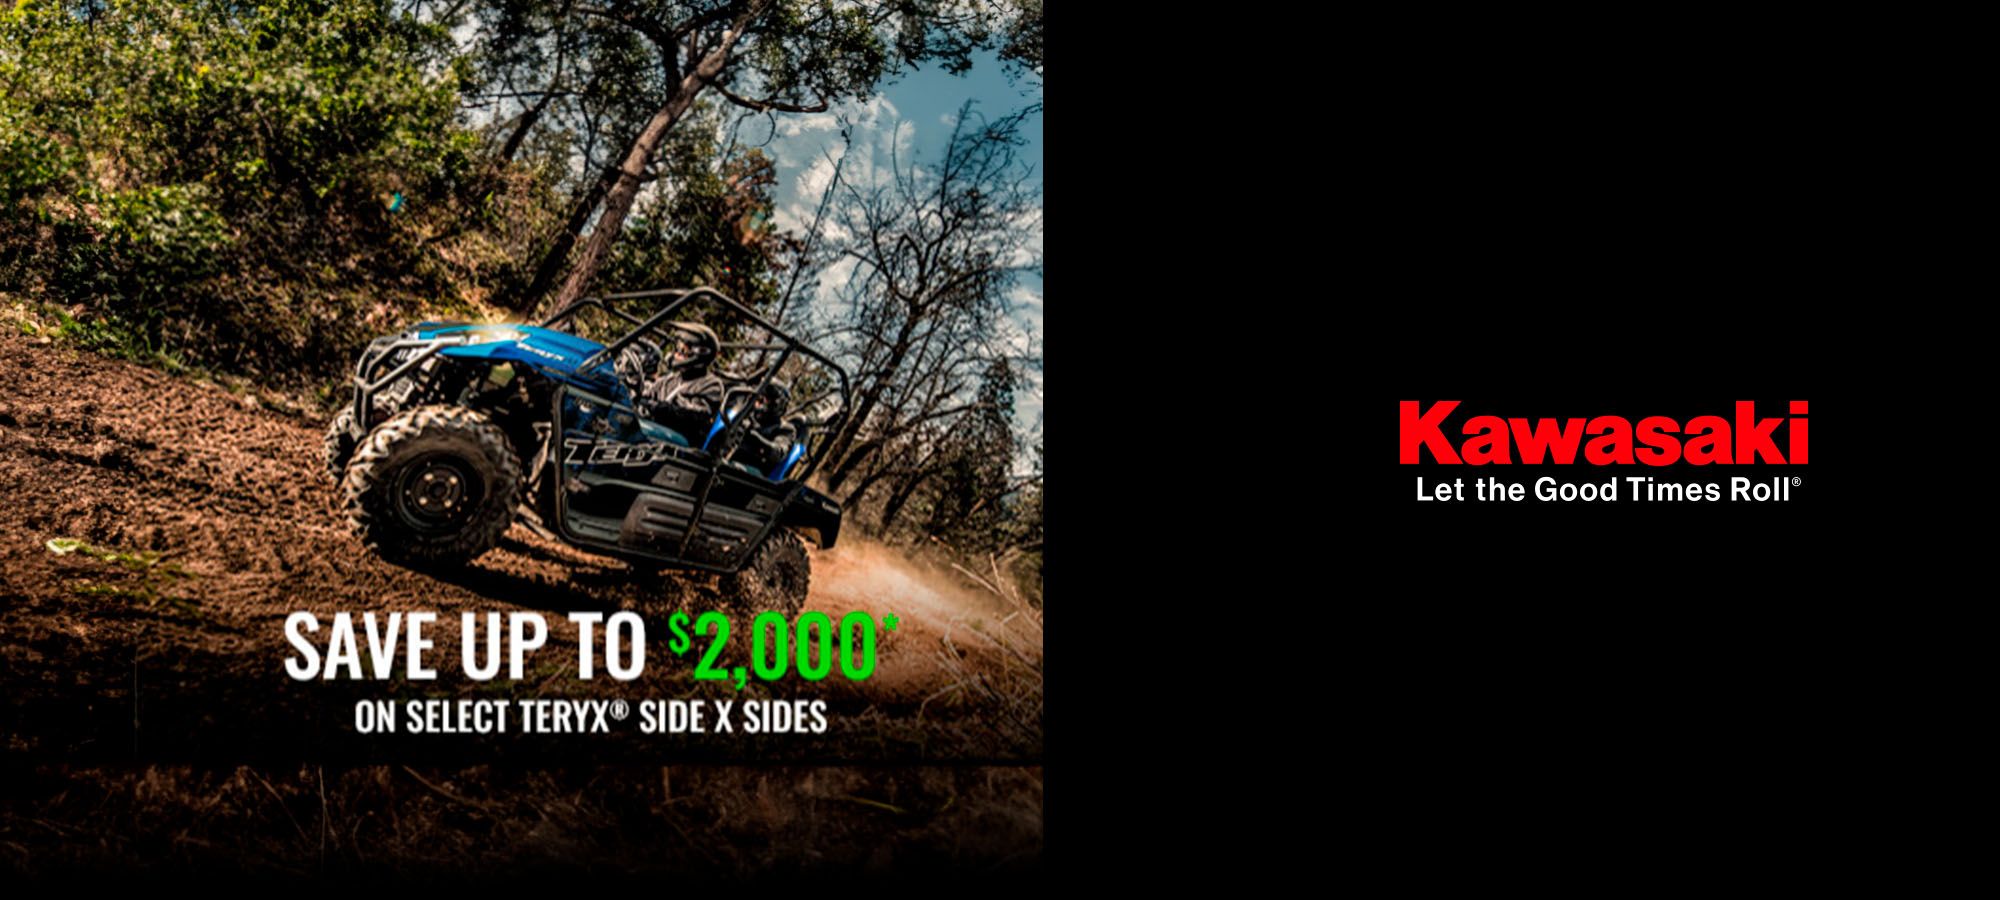 Kawasaki US - Save Up to $2,000* On Select Side X Sides at Ehlerding Motorsports